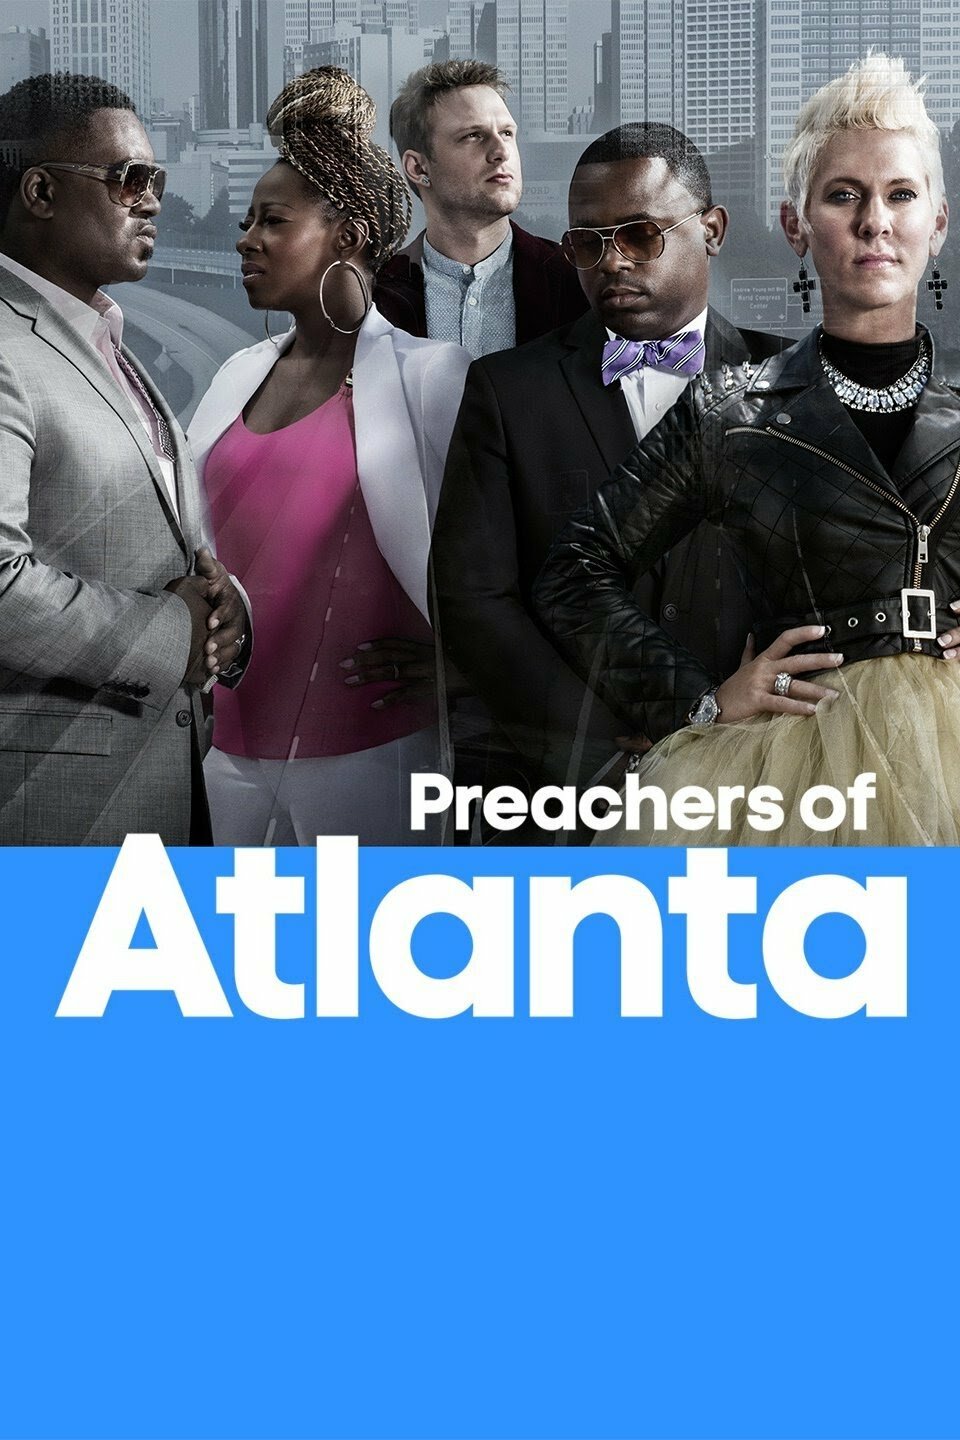 Preachers of Atlanta ne zaman